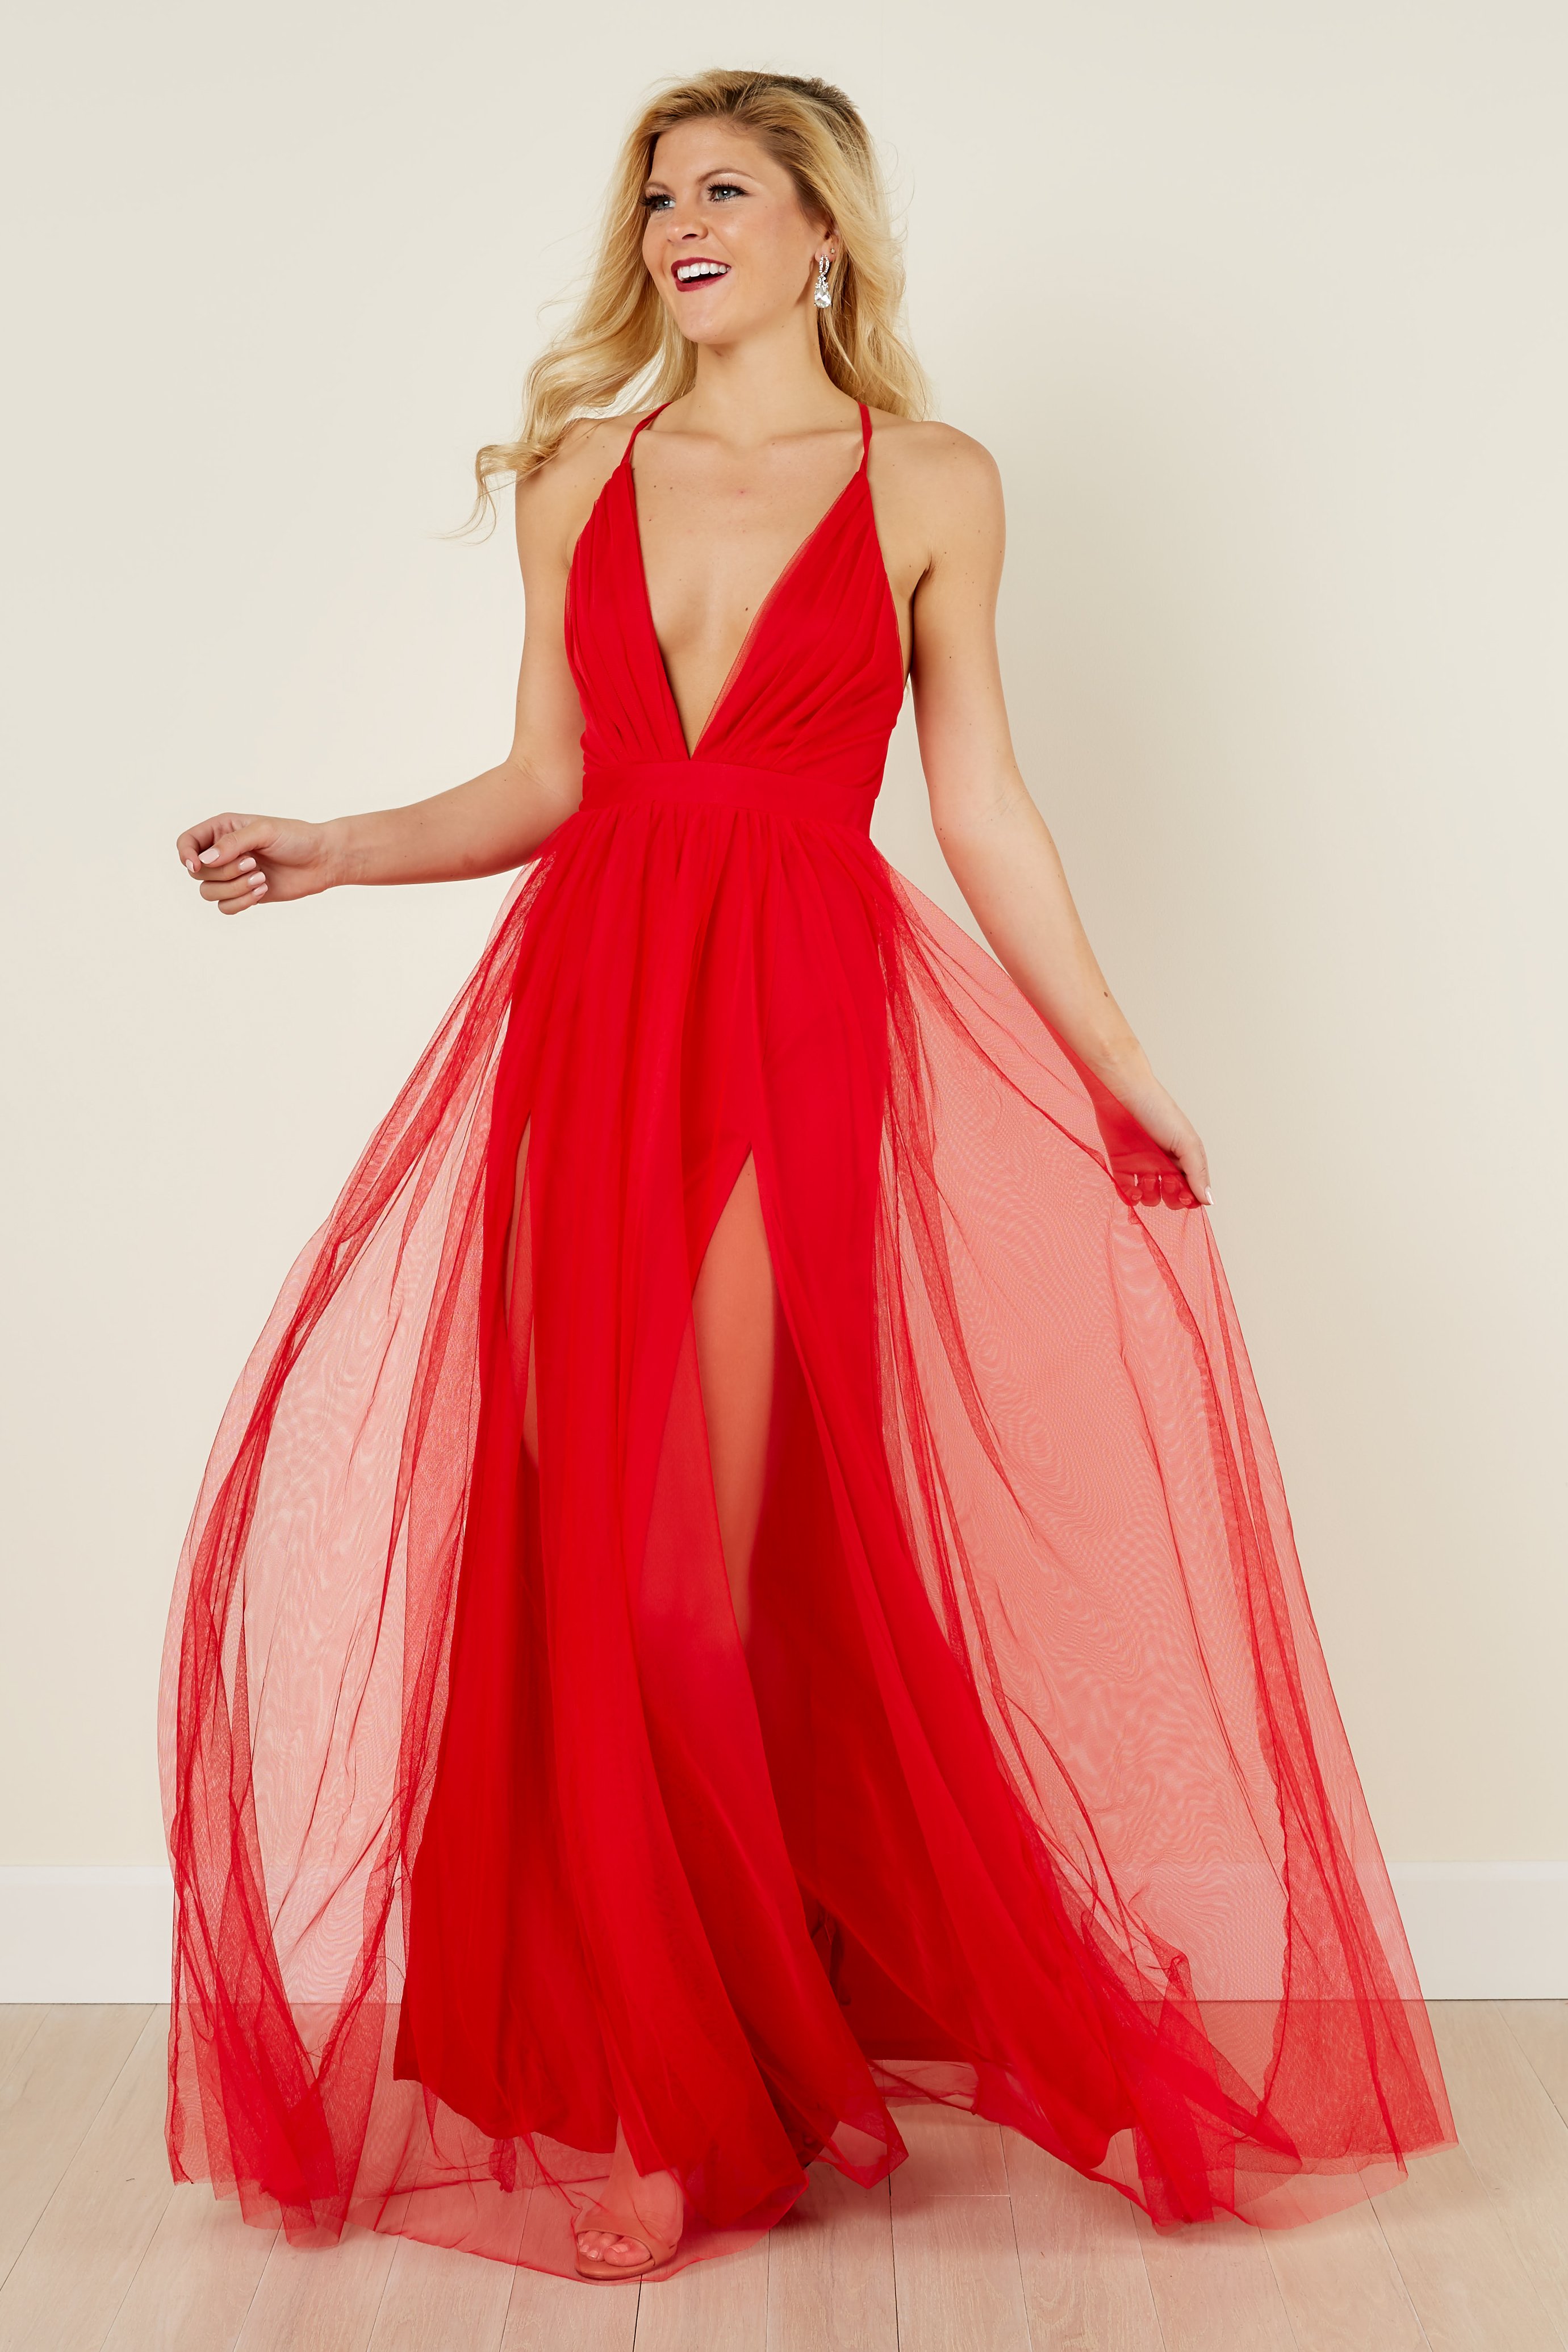 Elegant Red Dress - Maxi Dress - Deep V Neck Dress - $54.00 – Red ...